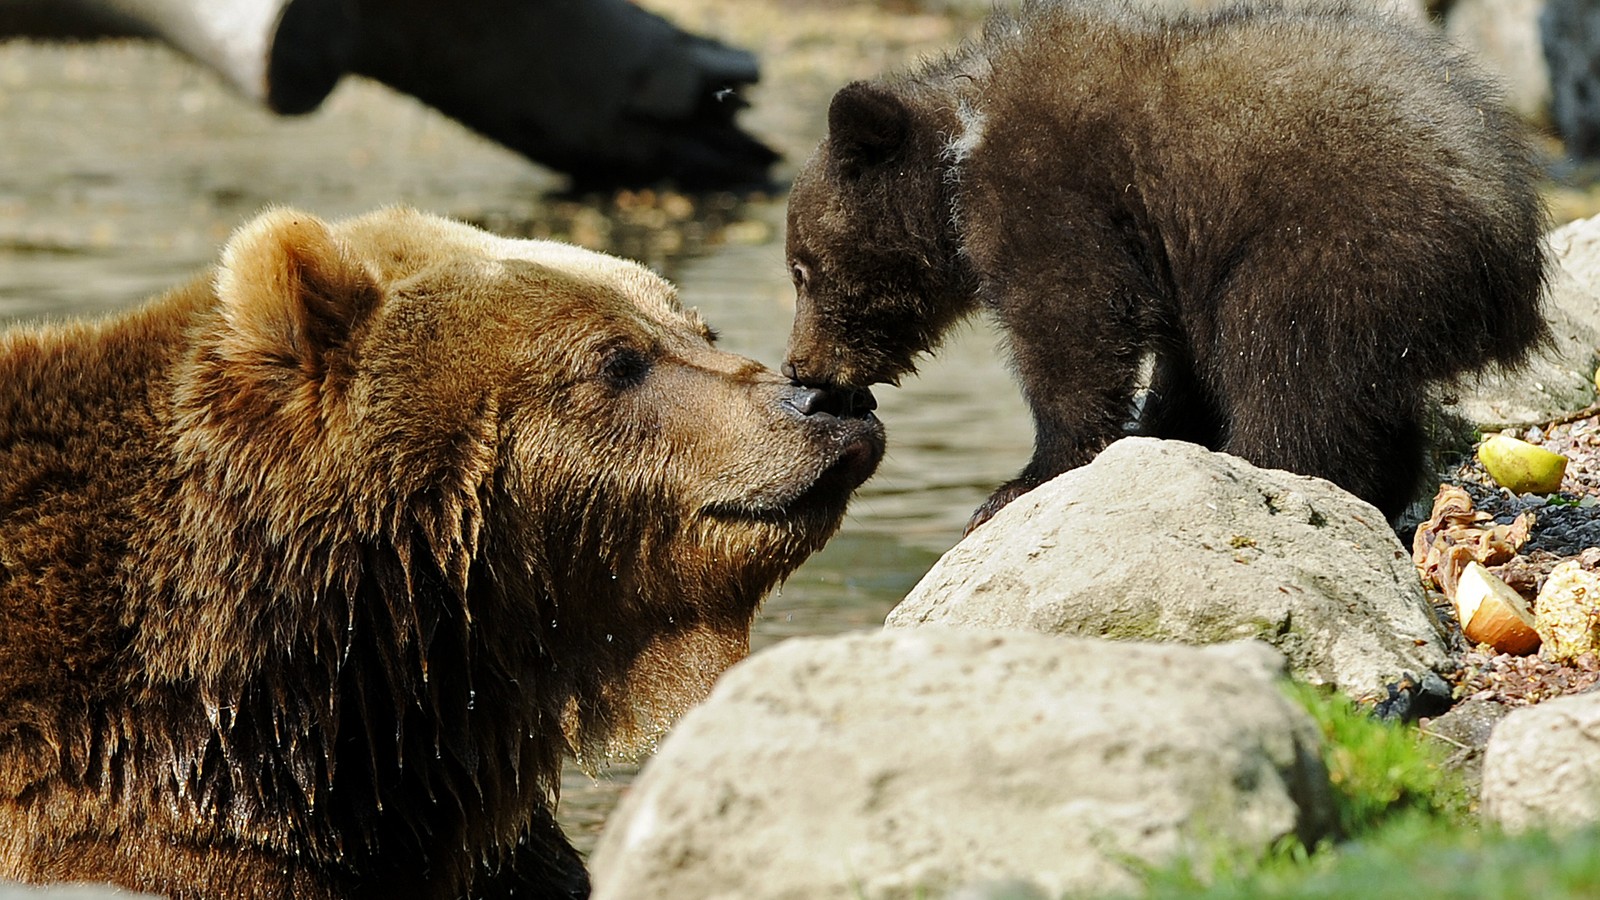 Mama bear keeps cubs longer as shield against hunters: study